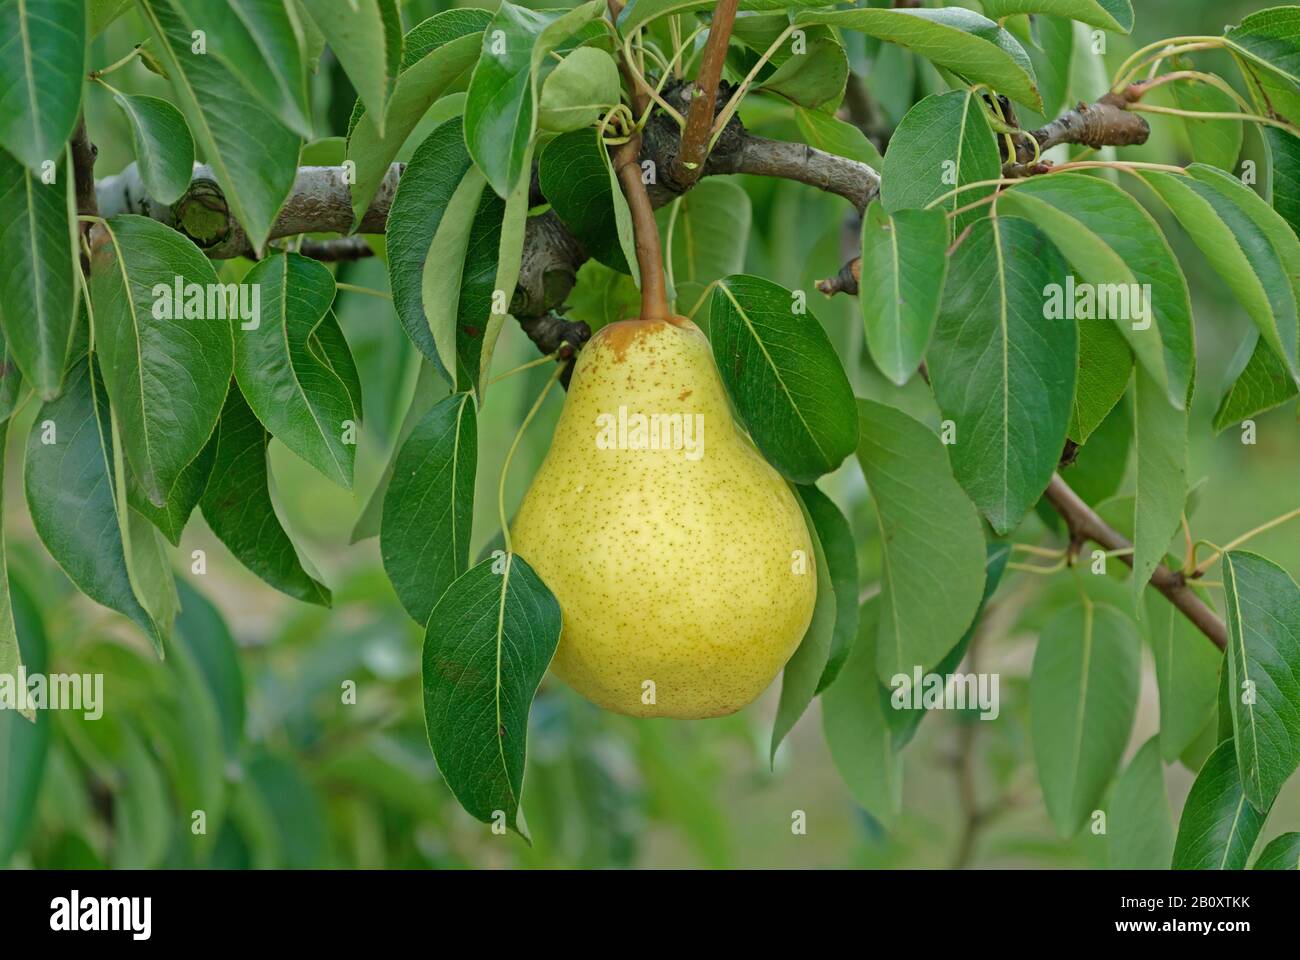 Common pear (Pyrus communis 'Williams Christ', Pyrus communis Williams Christ), pear on a tree, cultivar Williams Christ Stock Photo